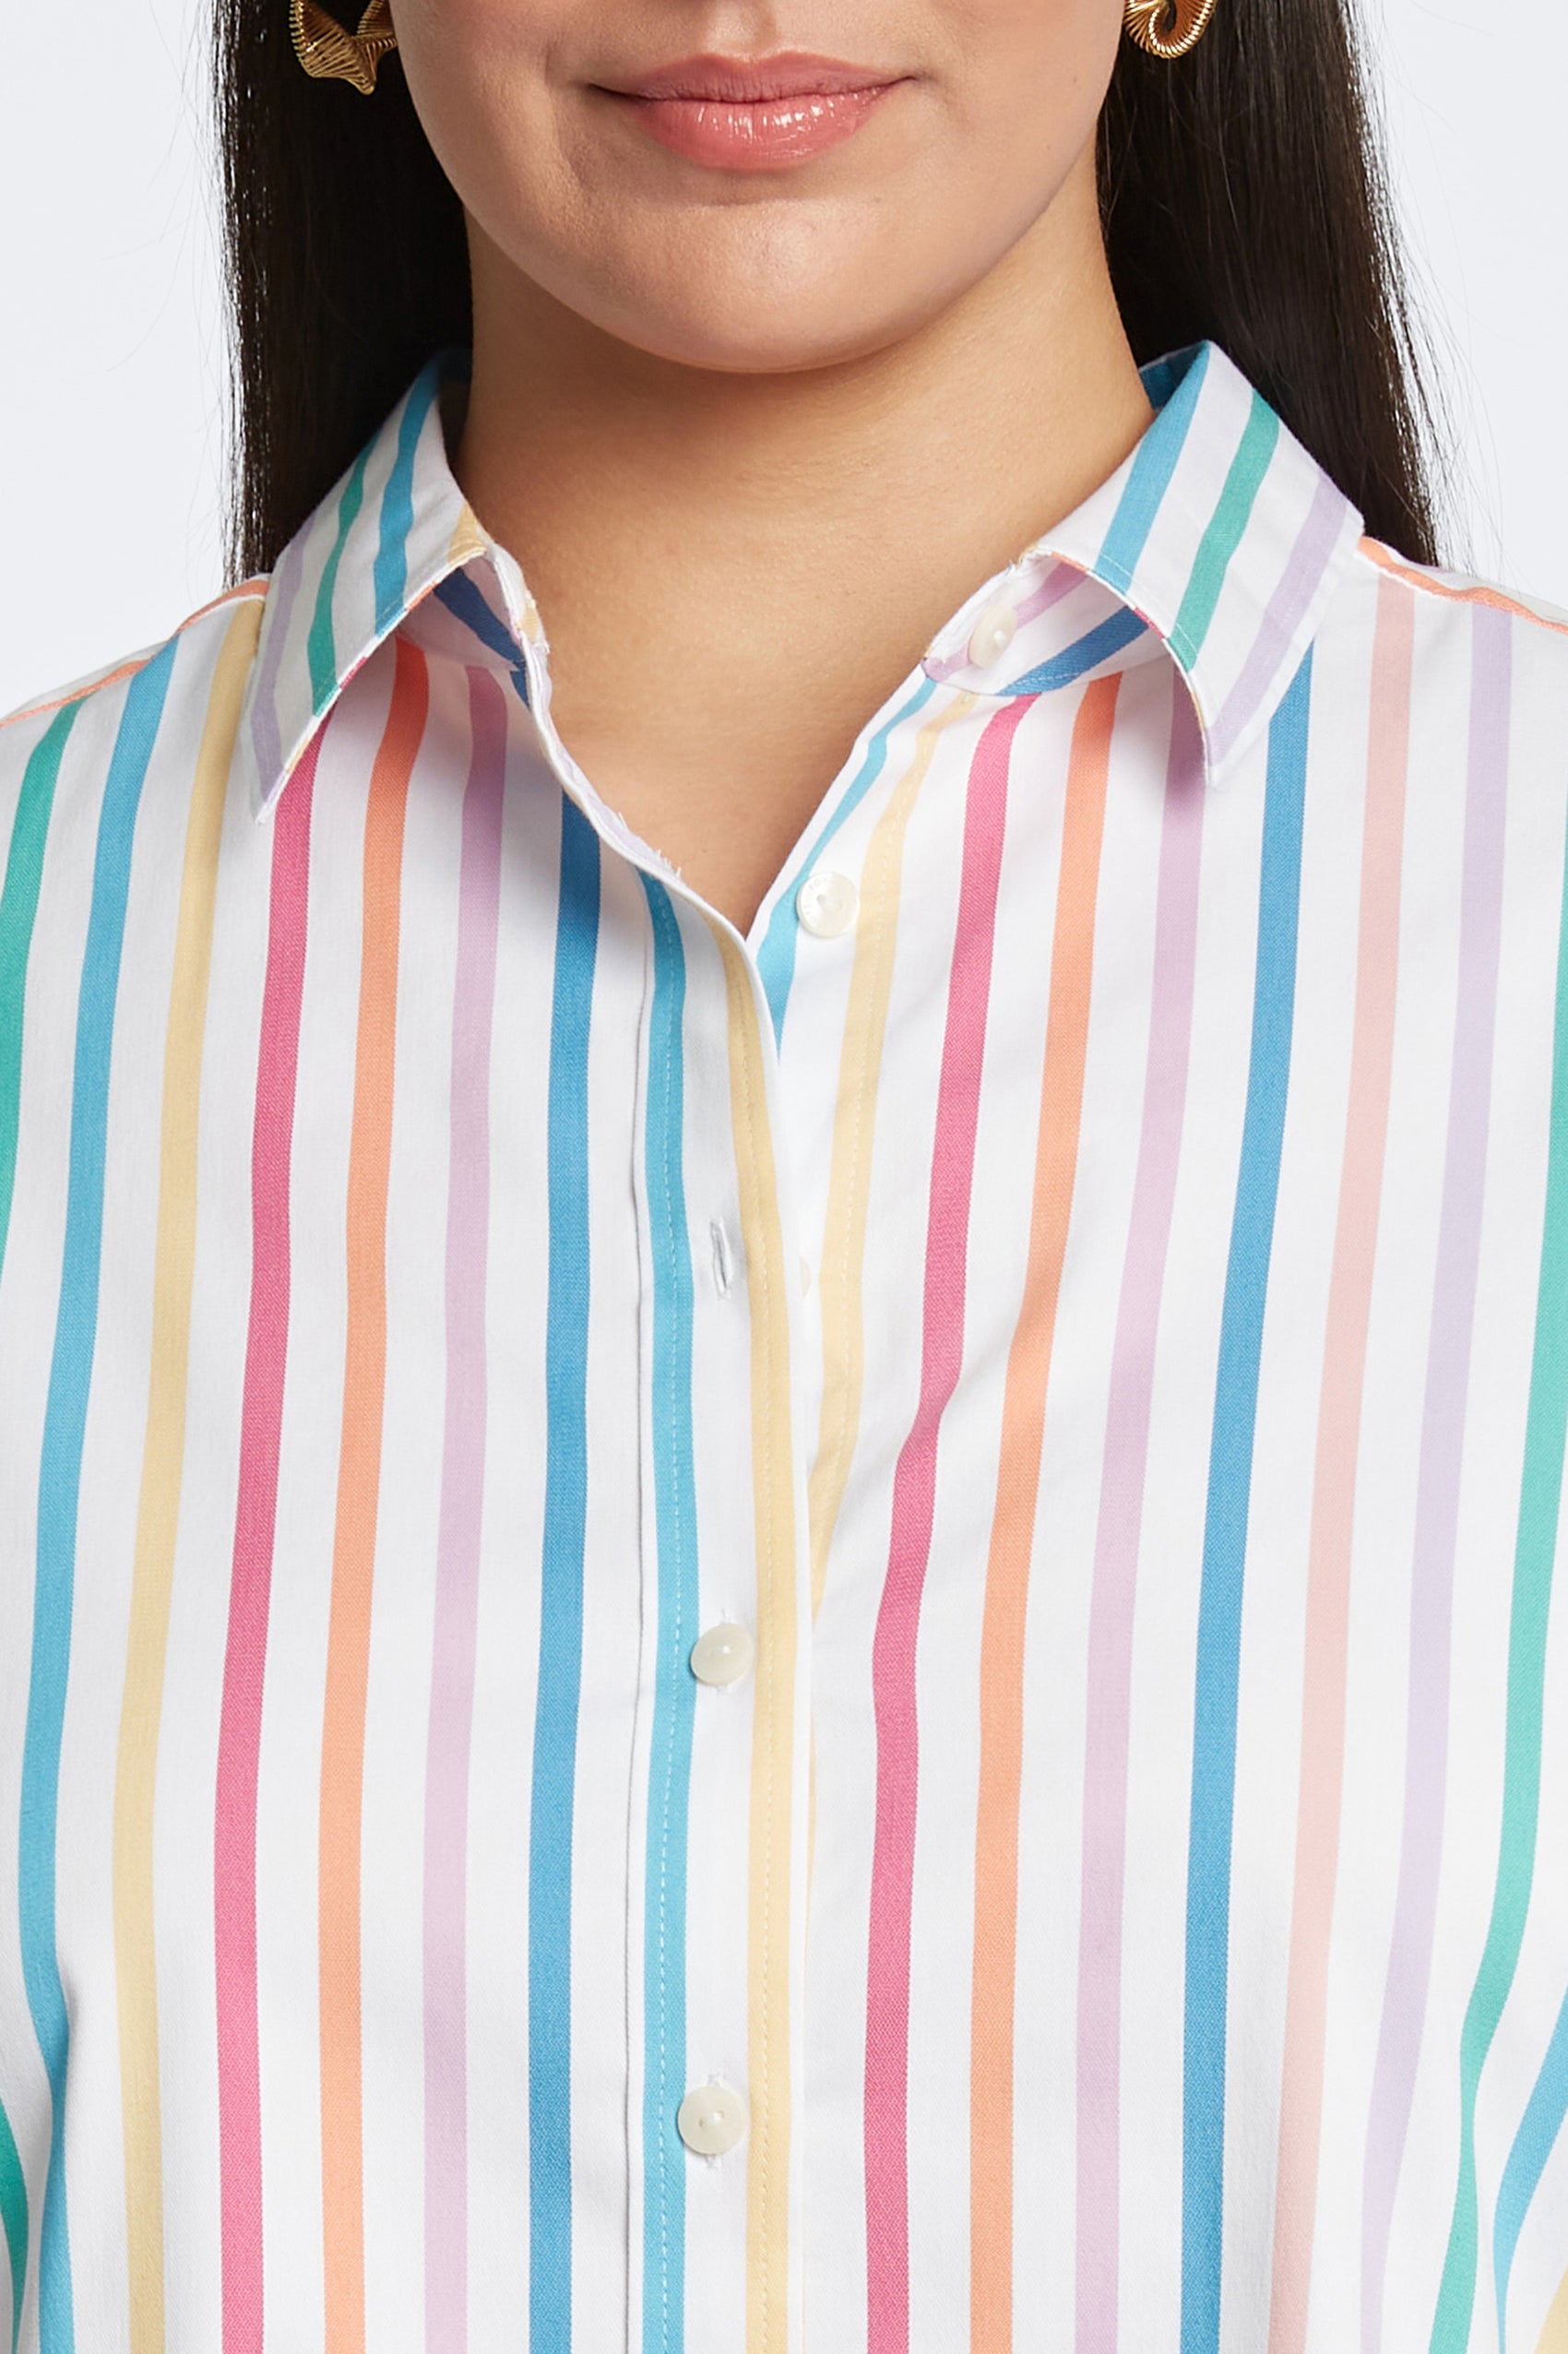 Meghan Plus No Iron Rainbow Stripe Shirt